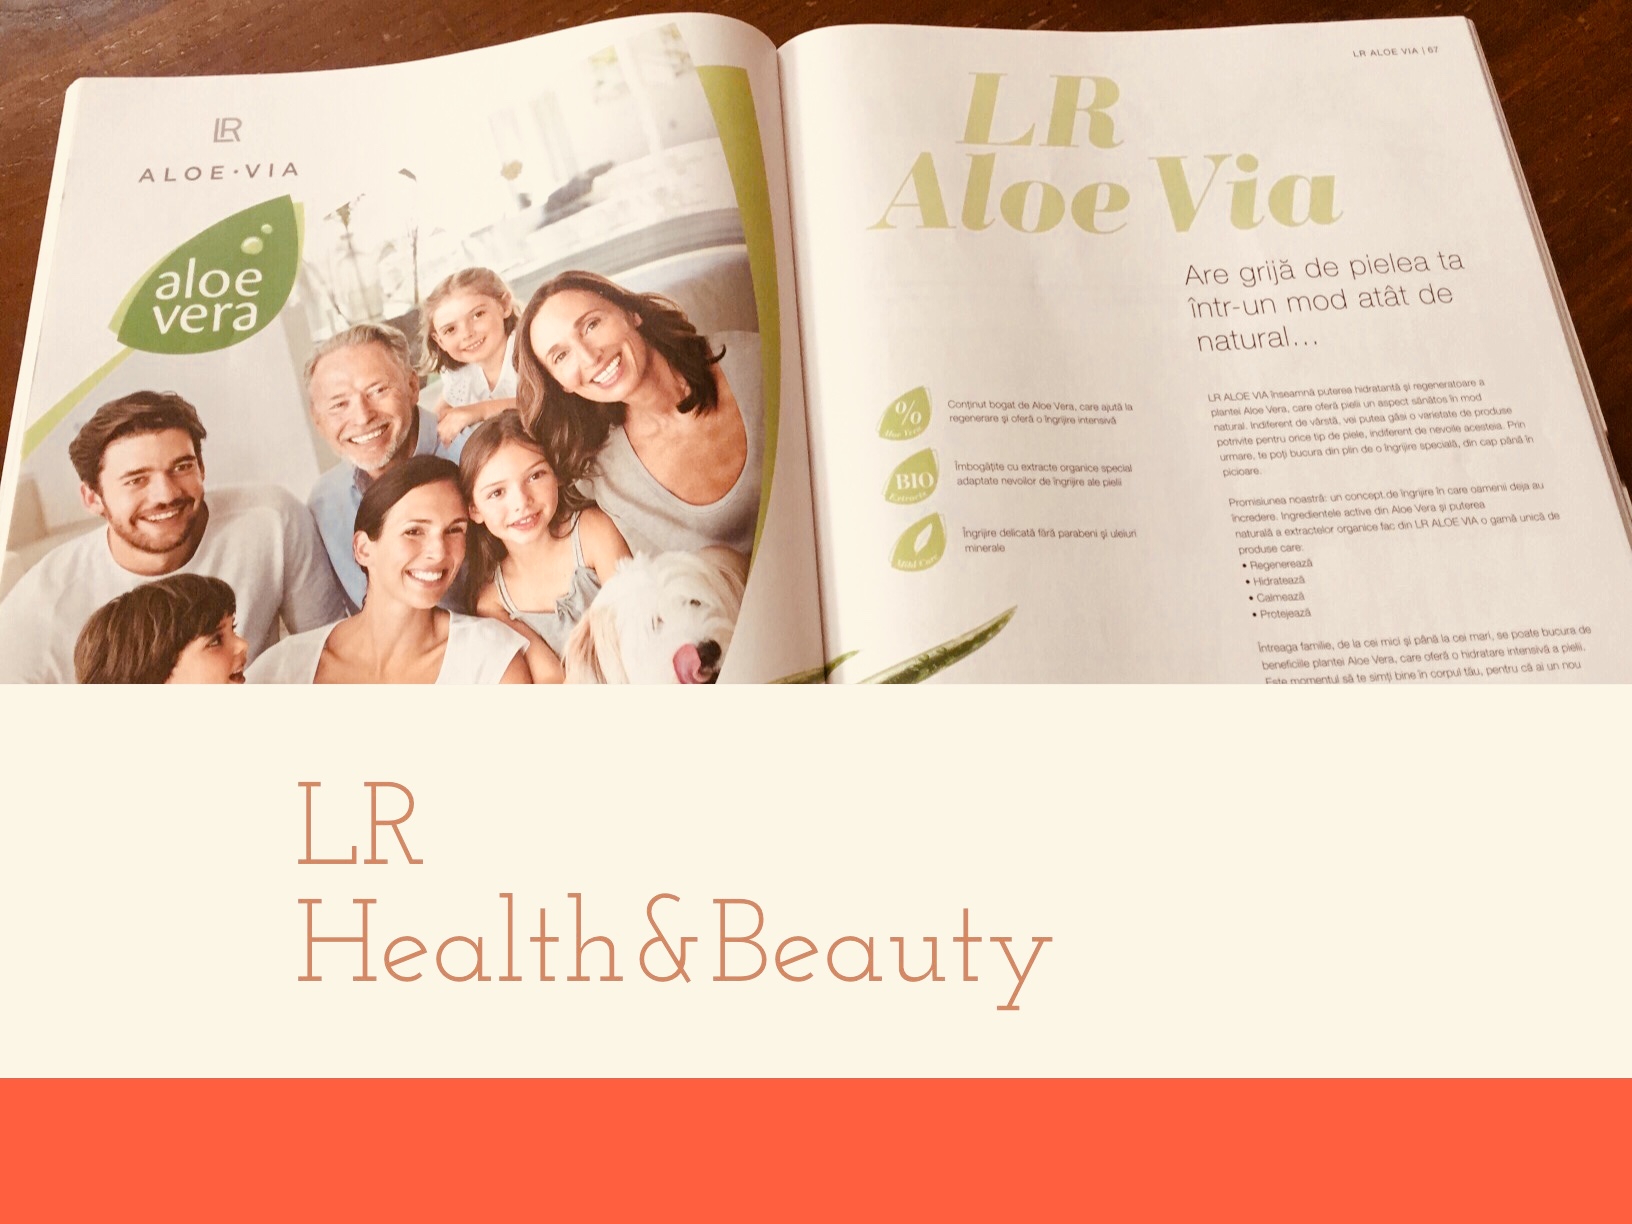 LR Health and Beauty